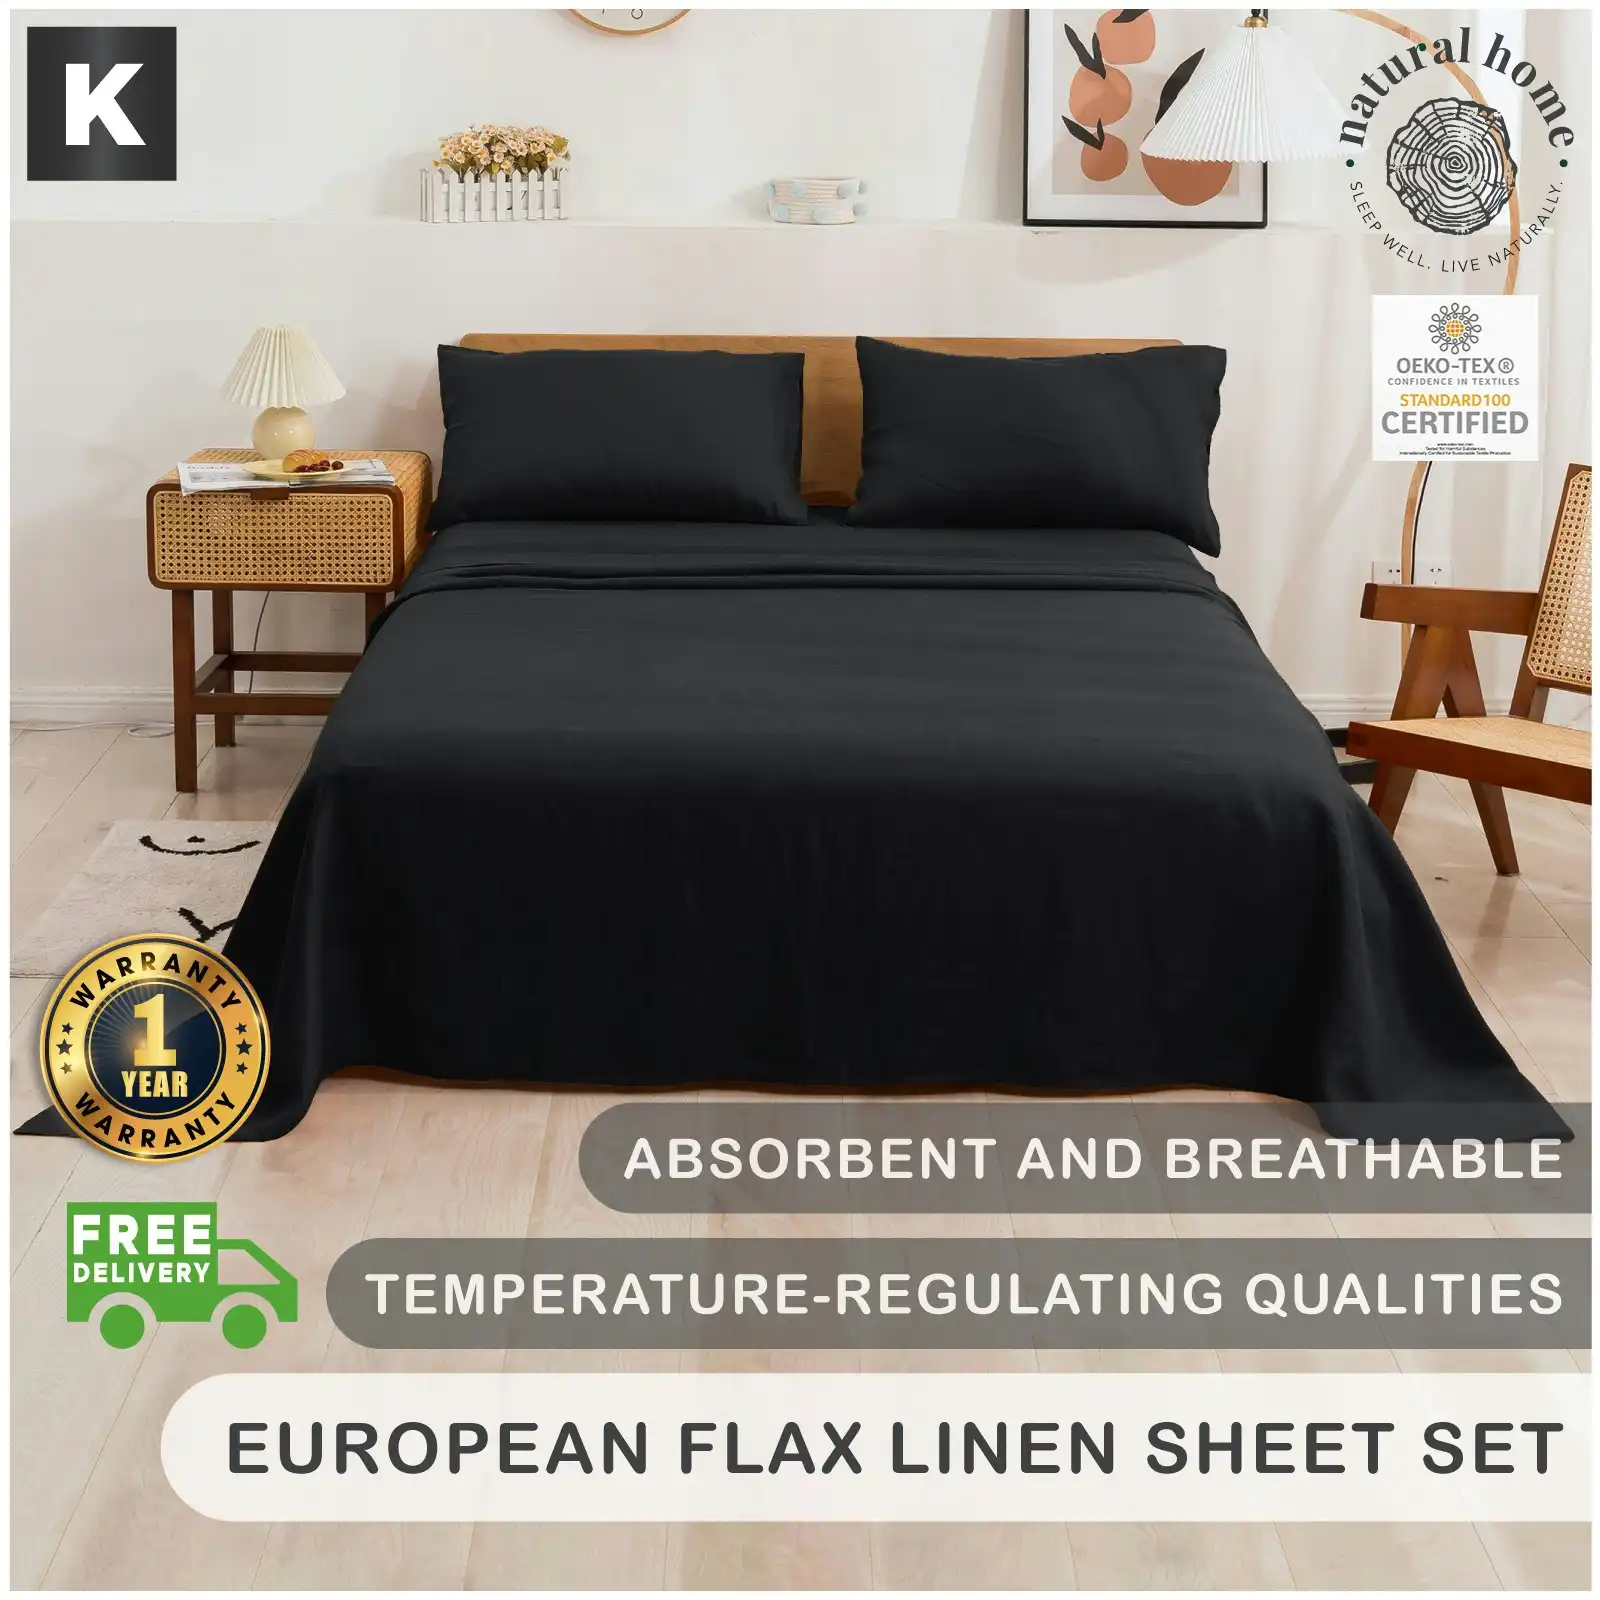 Natural Home 100% European Flax Linen Sheet Set Charcoal King Bed